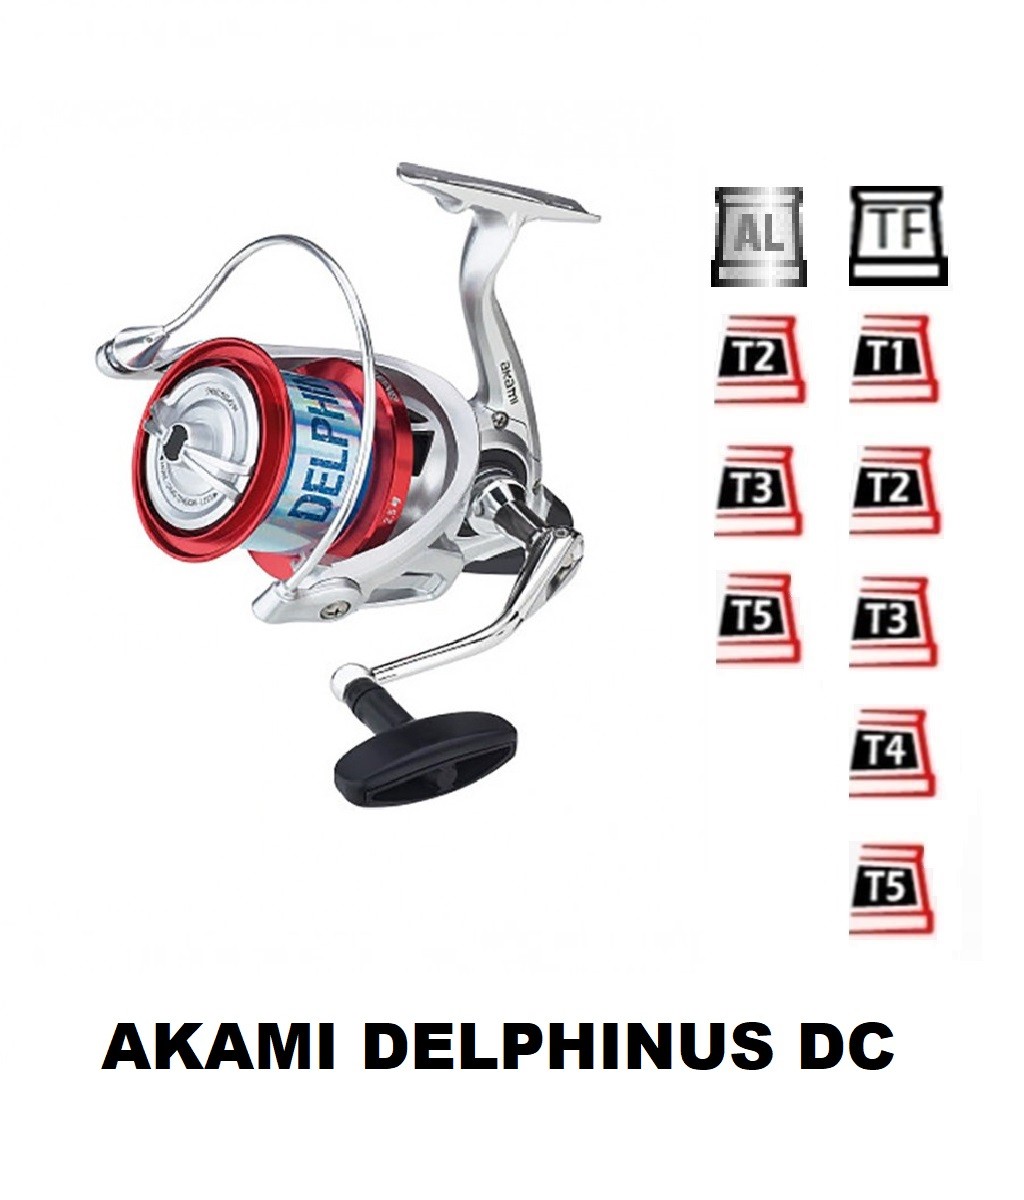 Bobine Akami Delphinus DC